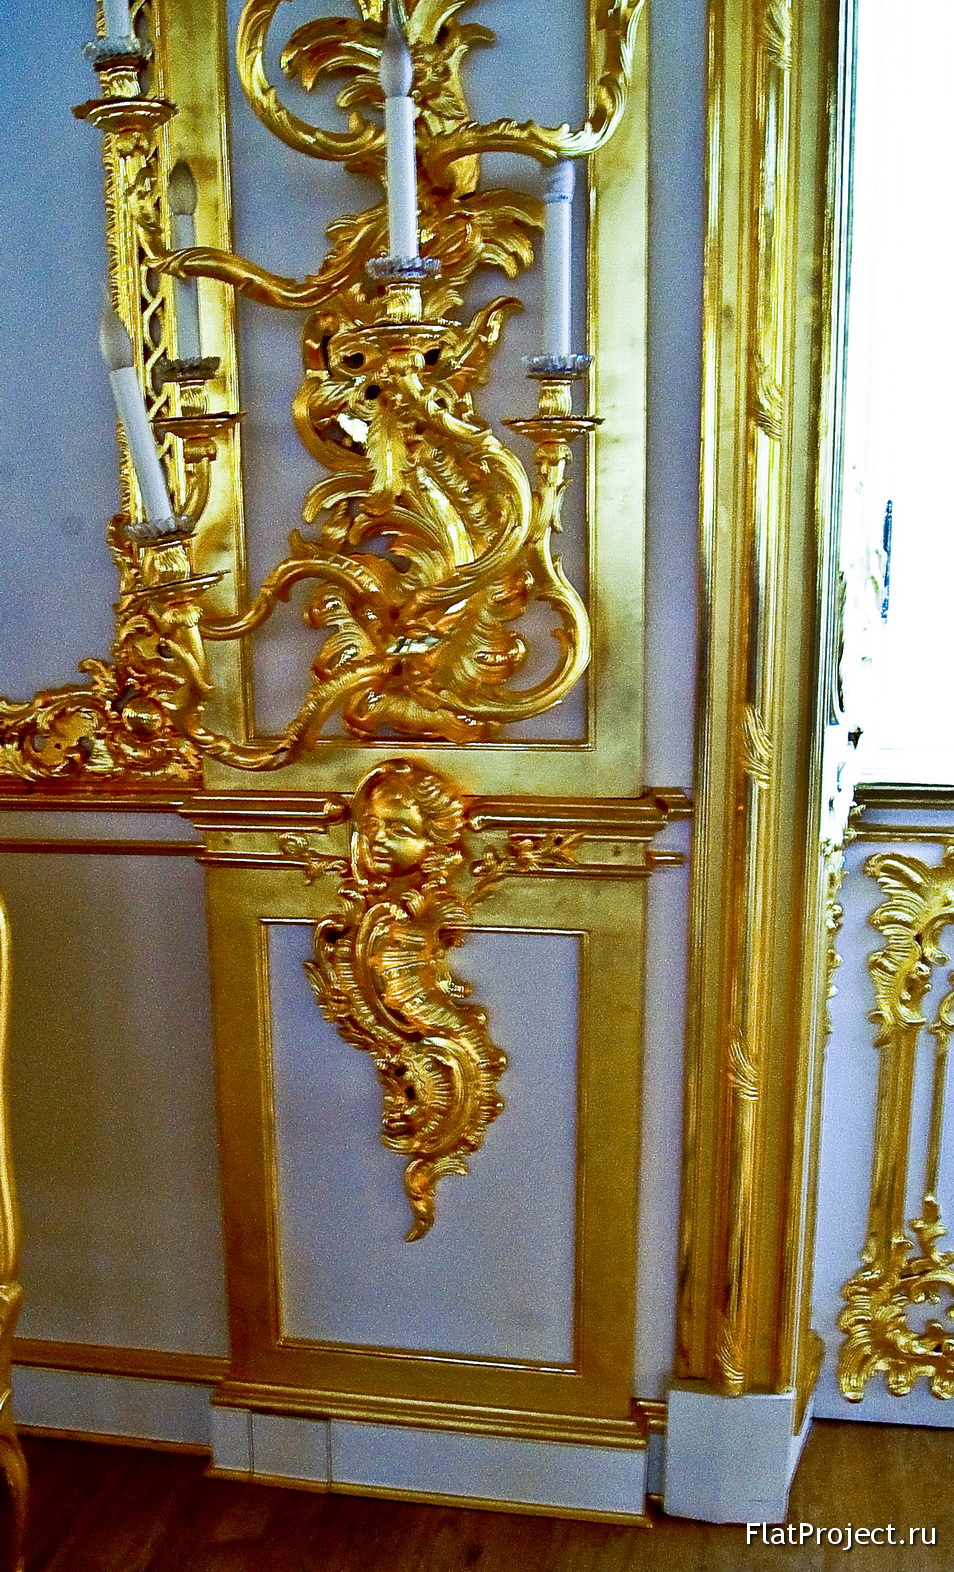 The Catherine Palace interiors – photo 295